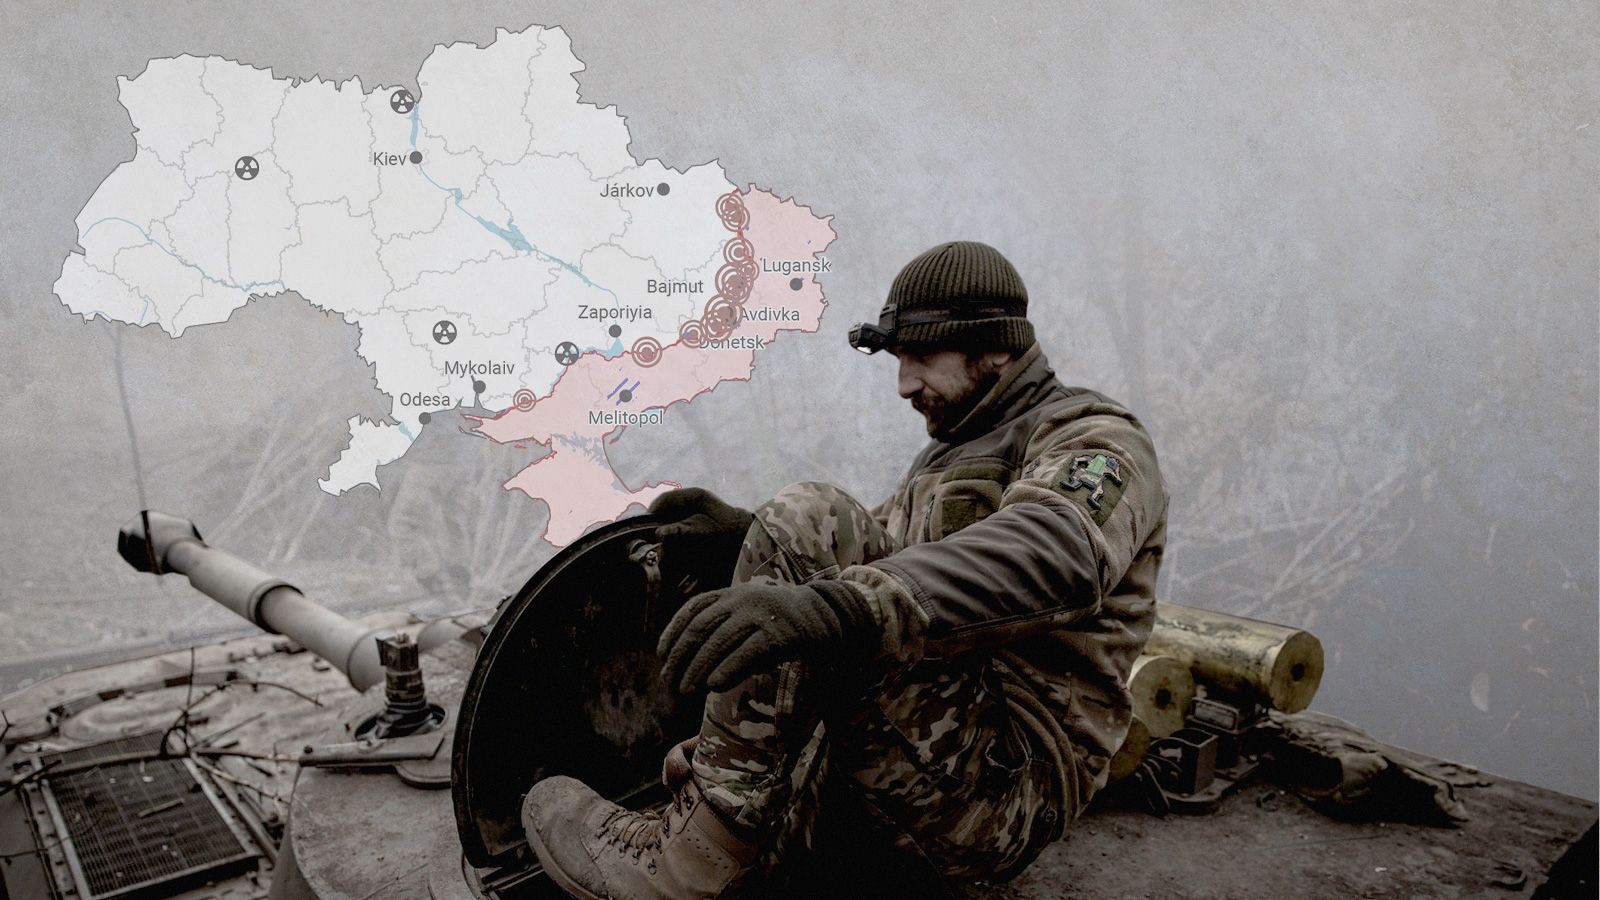 Los mapas de la semana 105ª de la guerra en Ucrania